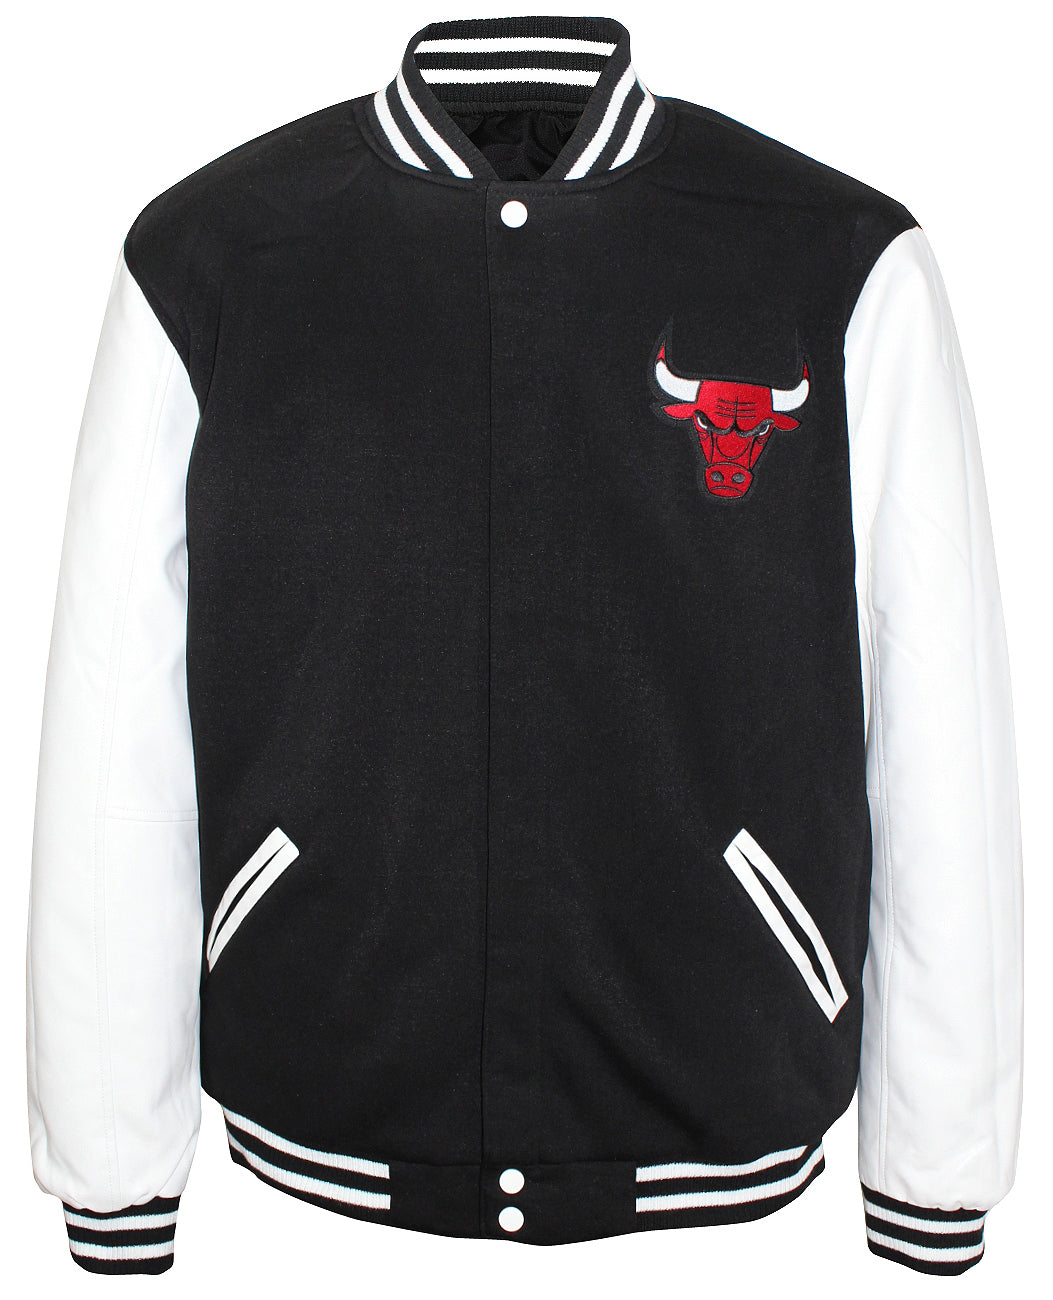 black and white bulls jacket